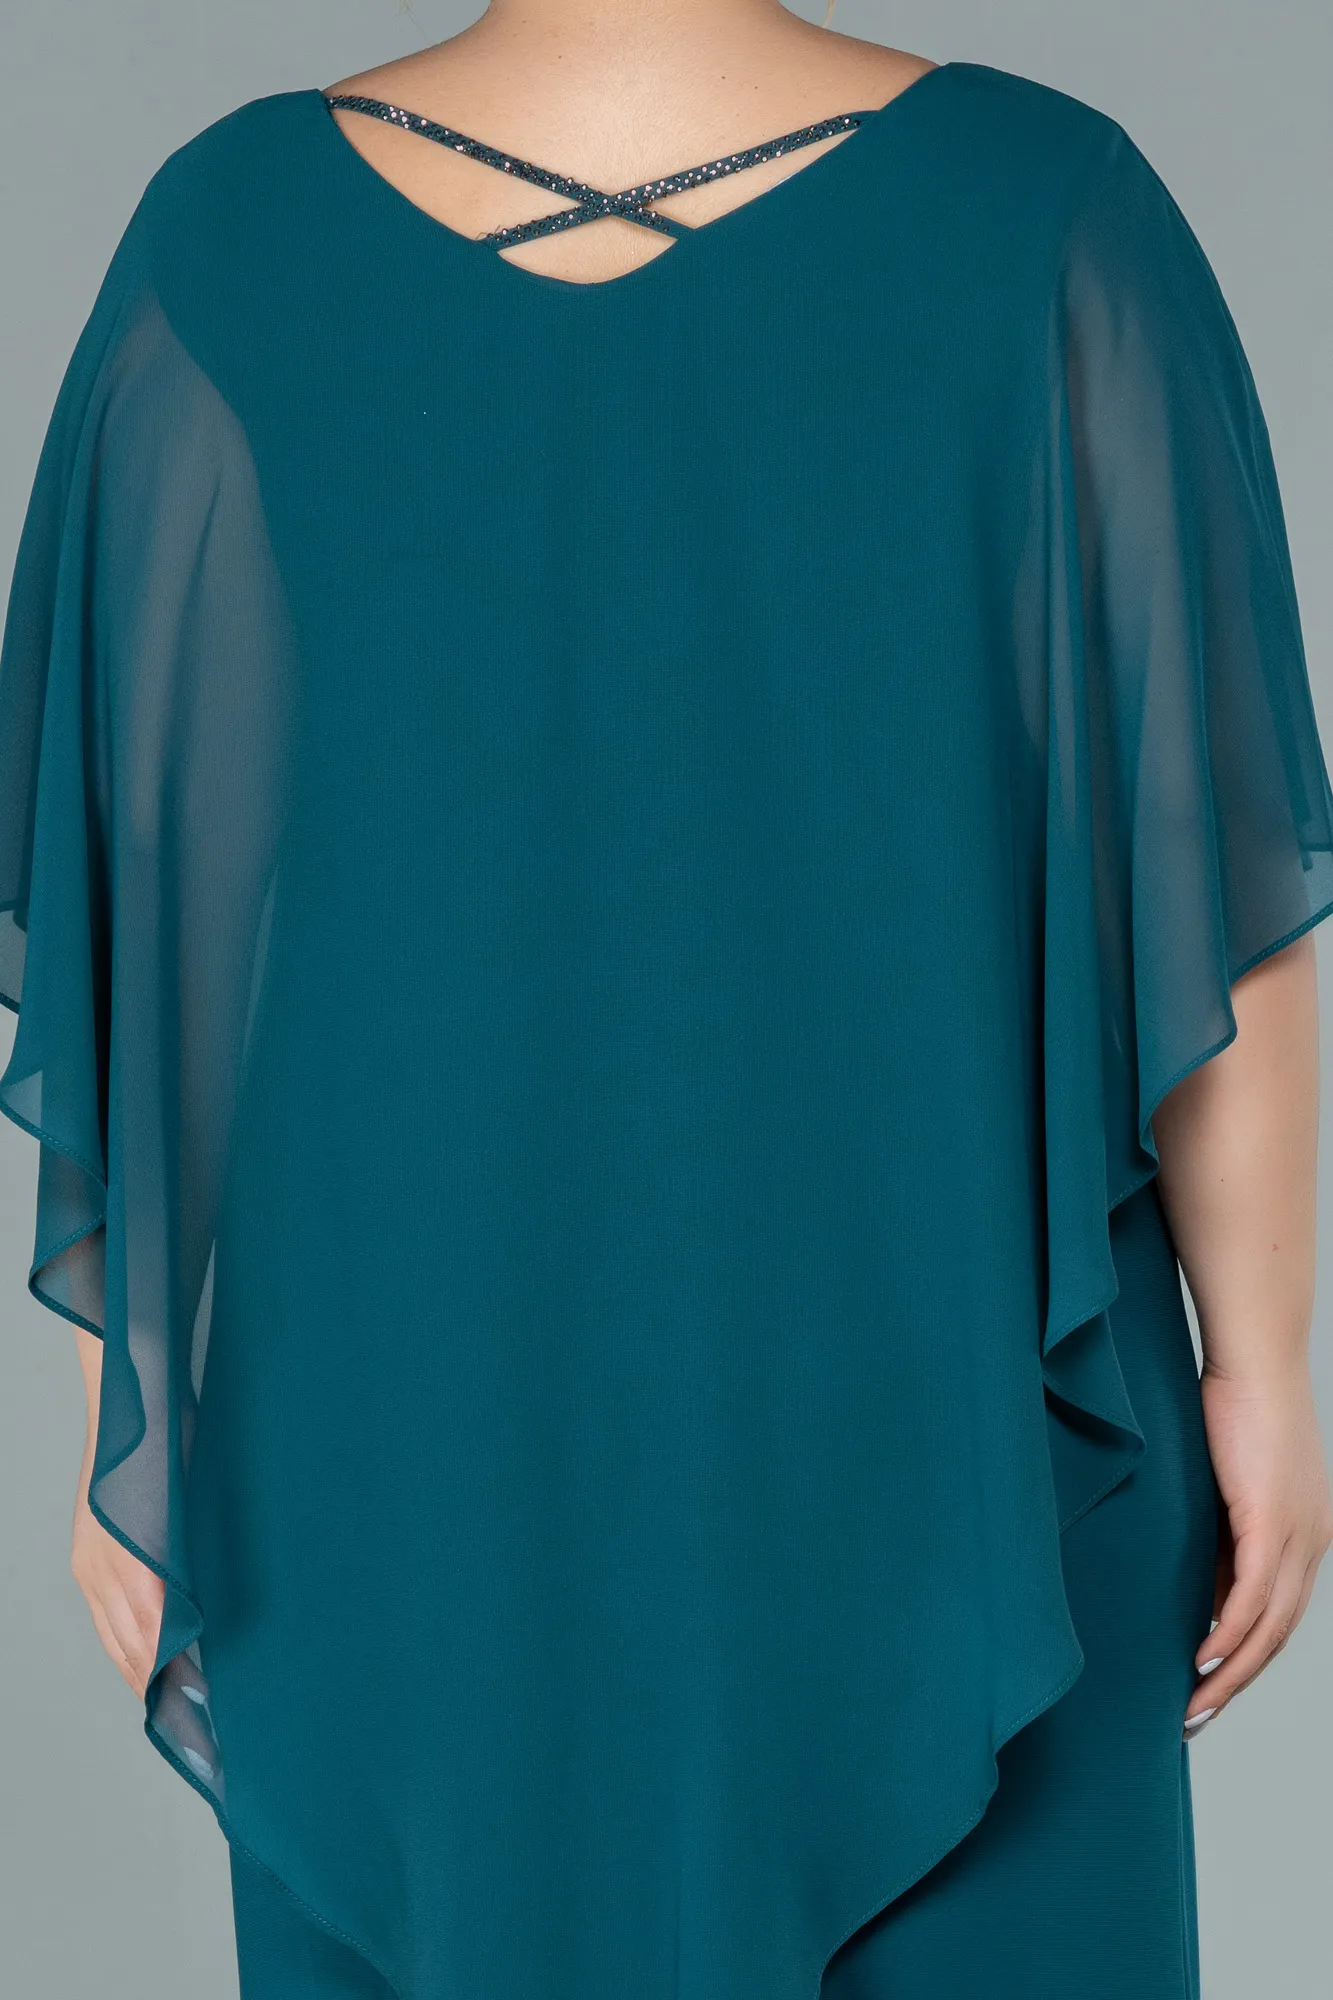 Emerald Green-Short Chiffon Plus Size Evening Dress ABK1494